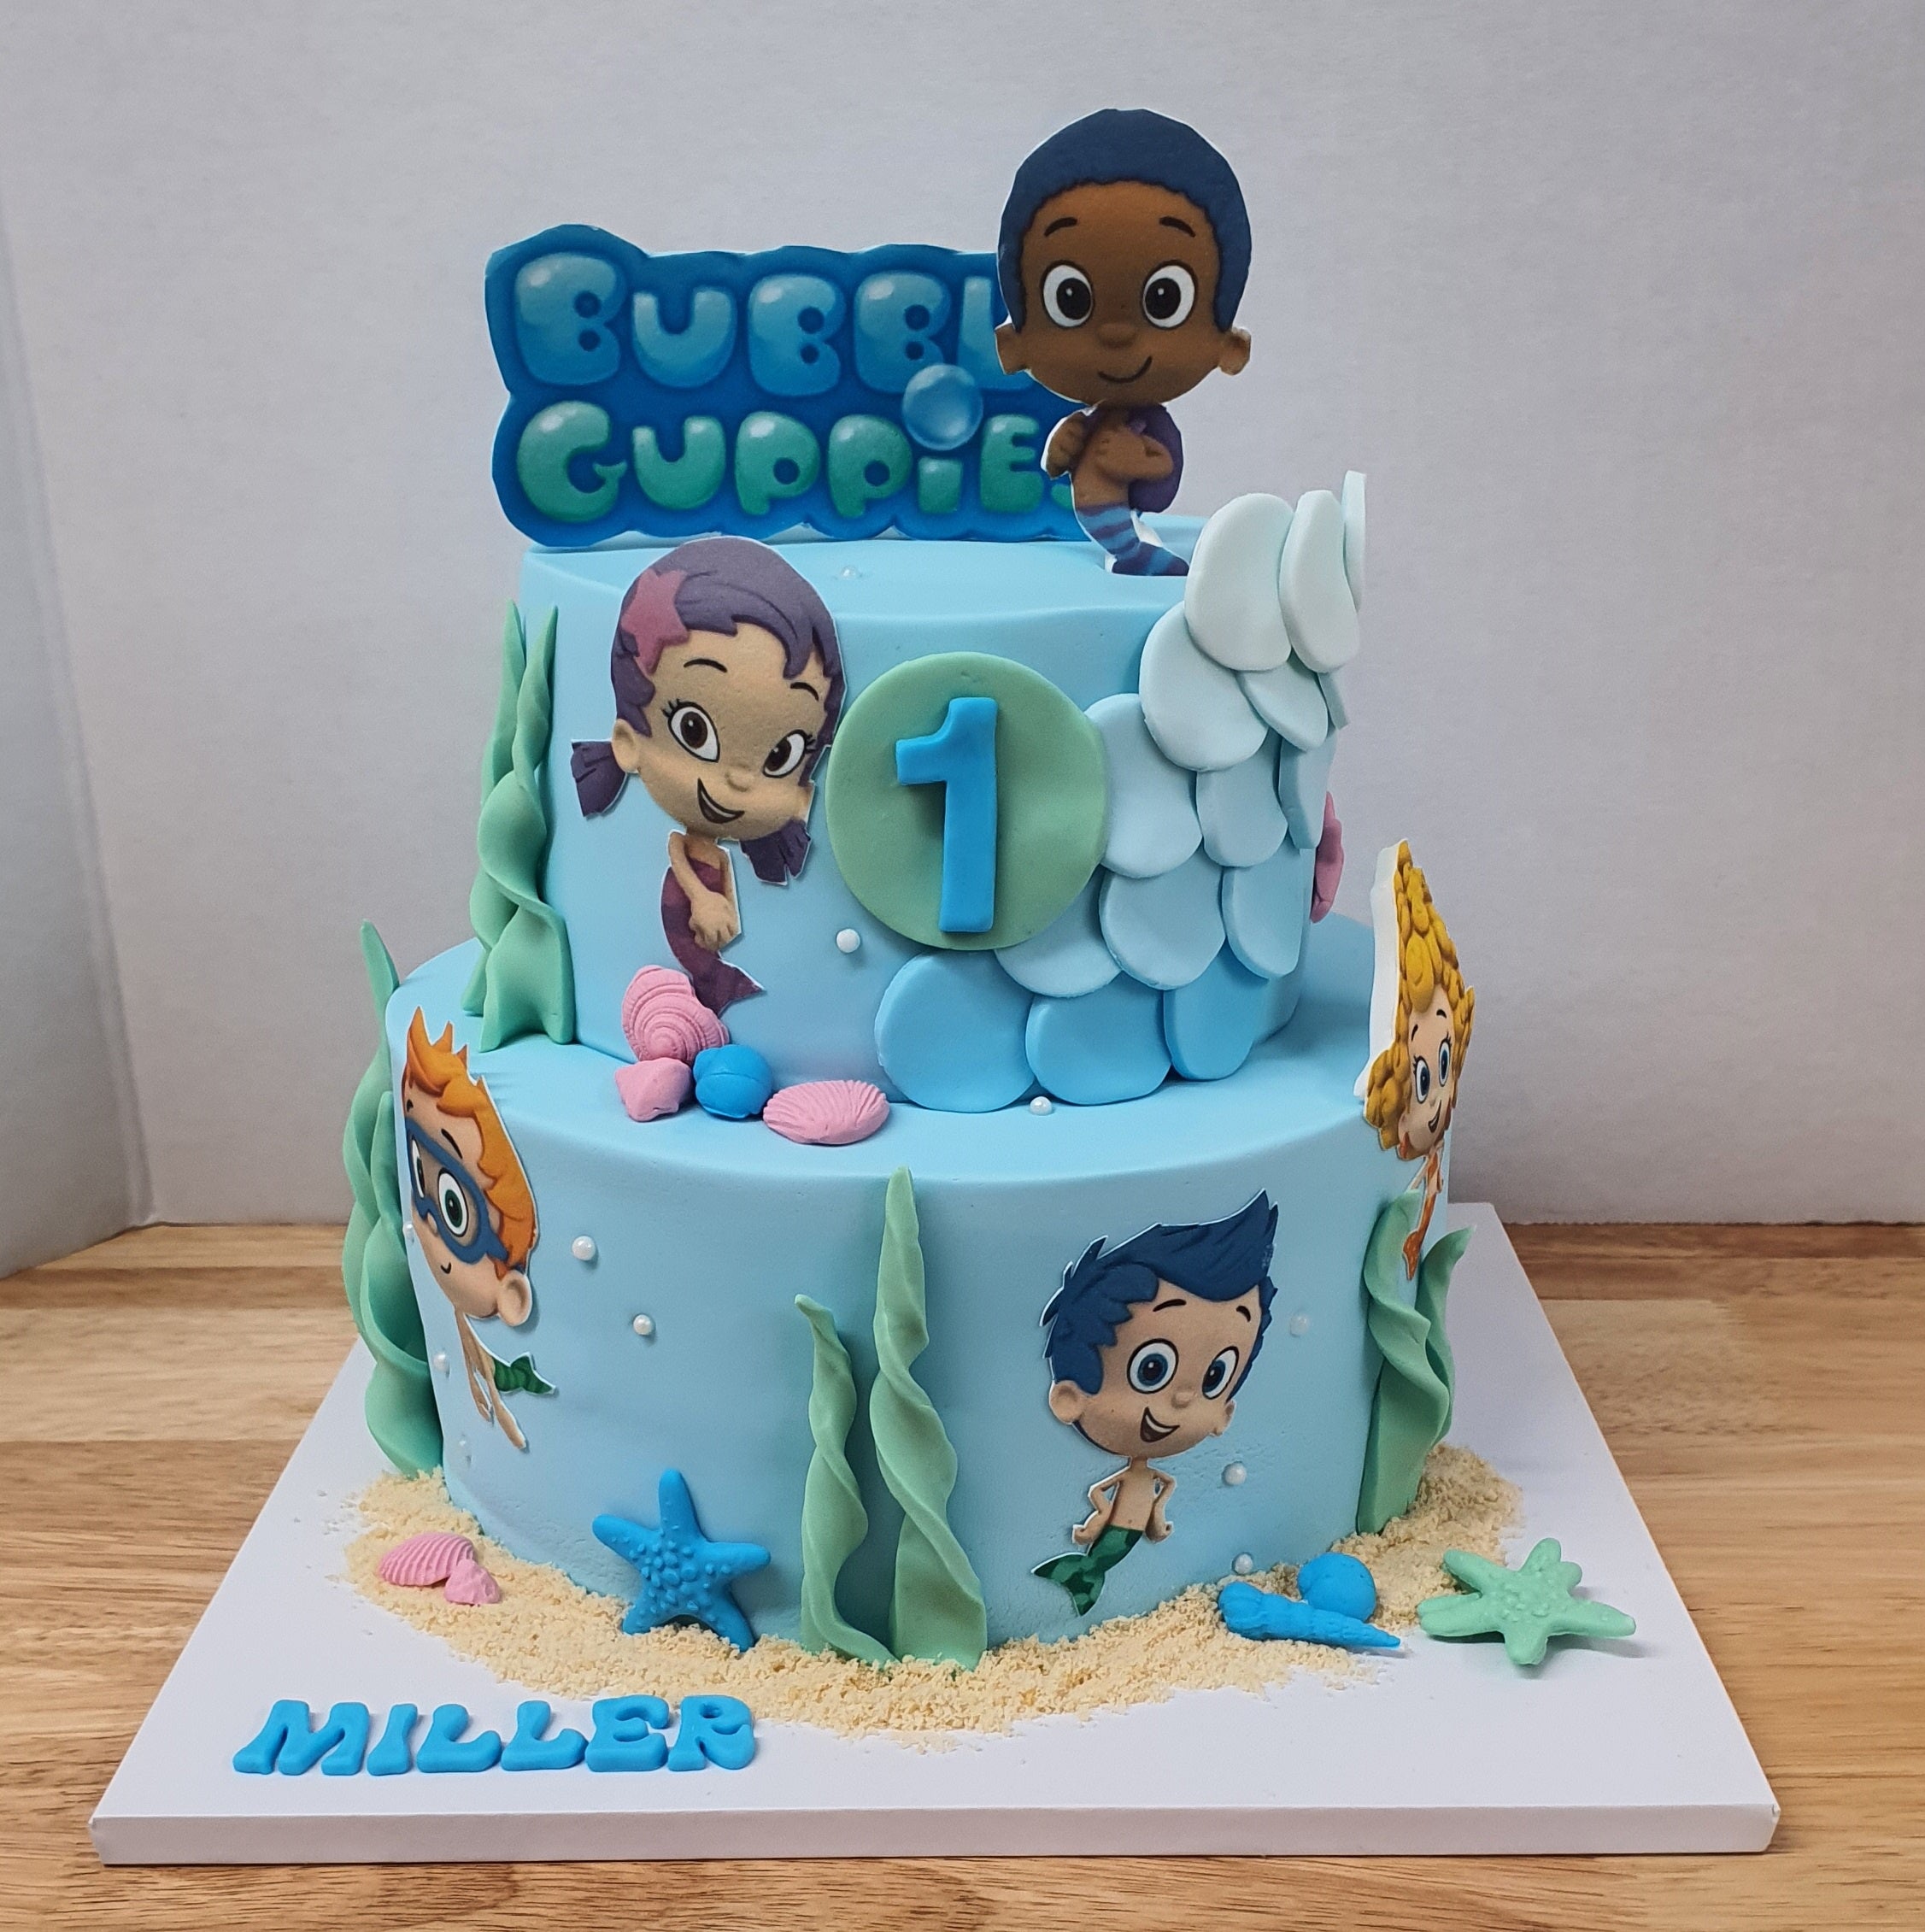 Bubbles bubbles bubbles | Summer birthday cake, Summer cakes, Bubble cake